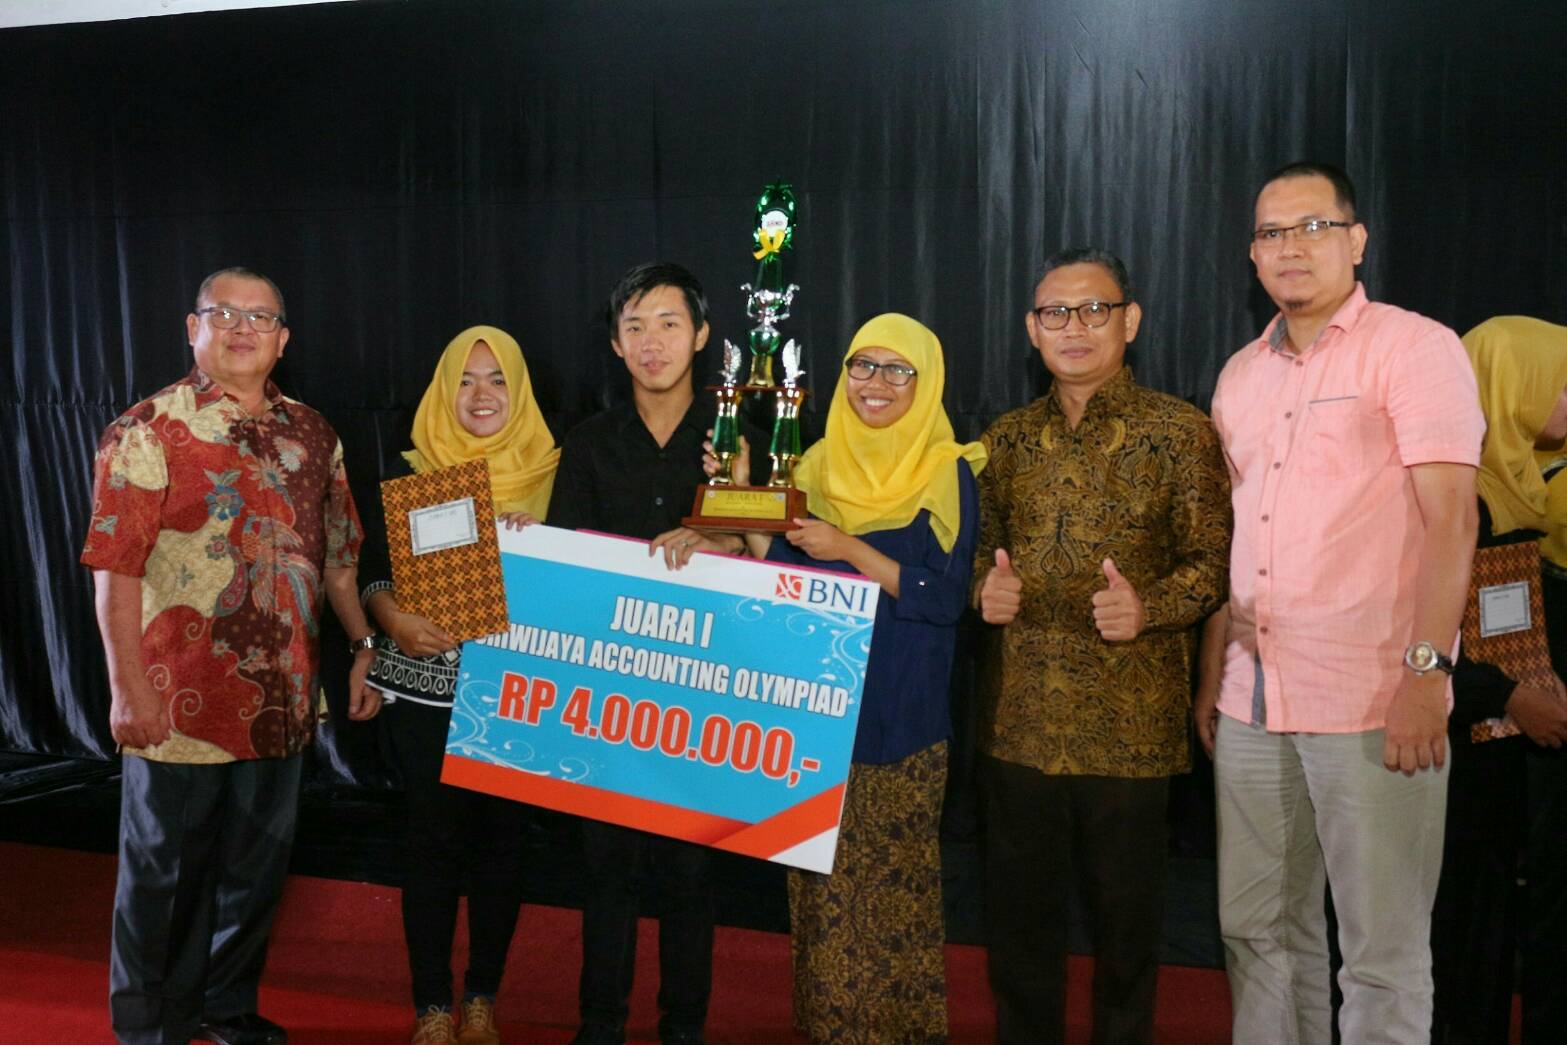 Tim S1 Akuntansi Raih Juara 1 Sriwijaya Accounting Olympiad